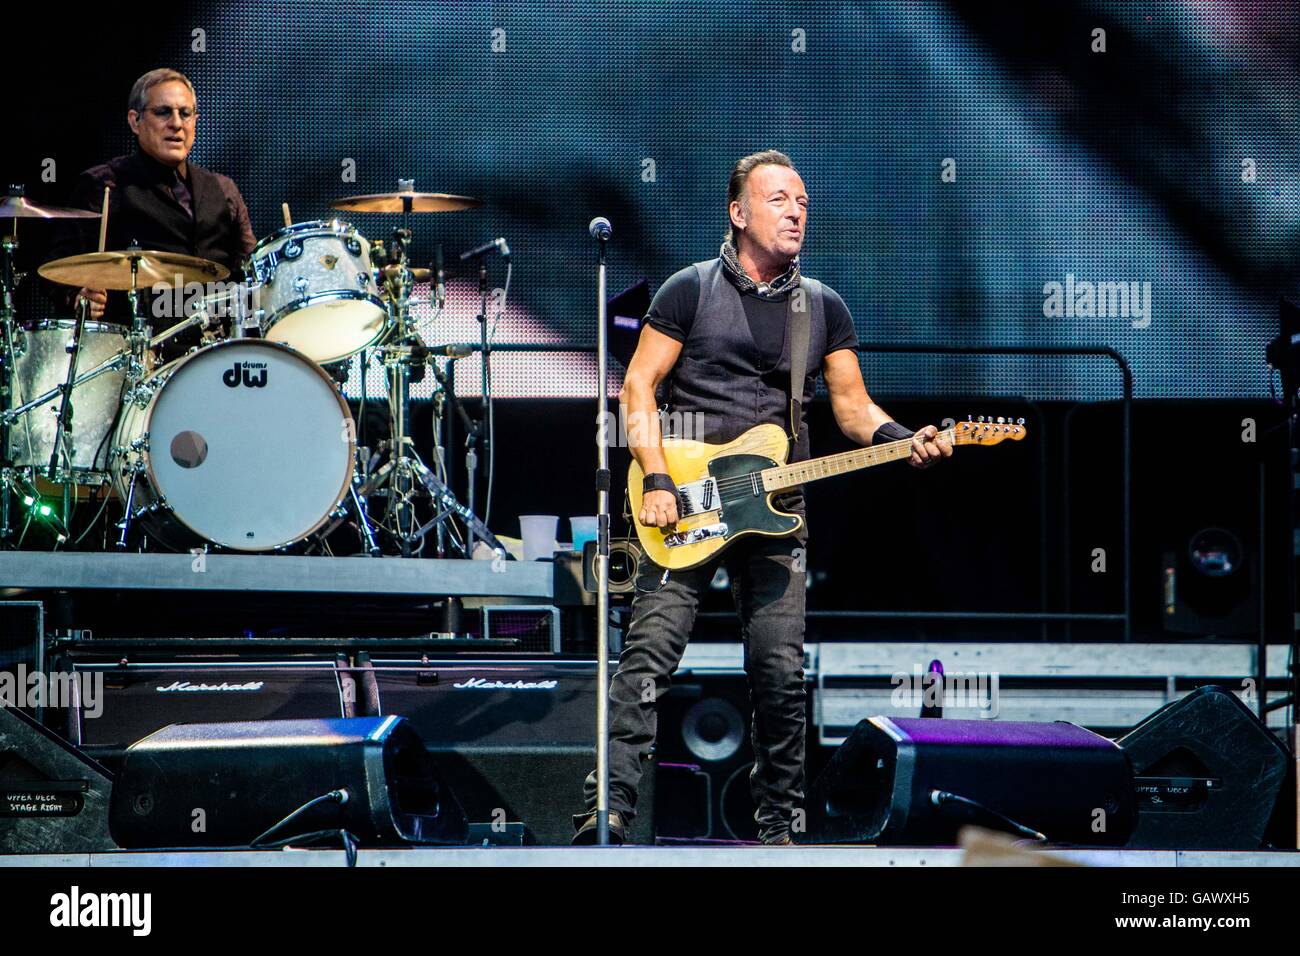 Mailand, Italien. 5. Juli 2016. Bruce Springsteen führt live im Stadio San Siro in Mailand am 5. Juli 2016 für The River Tour Credit: Mairo Cinquetti/Alamy Live News Stockfoto